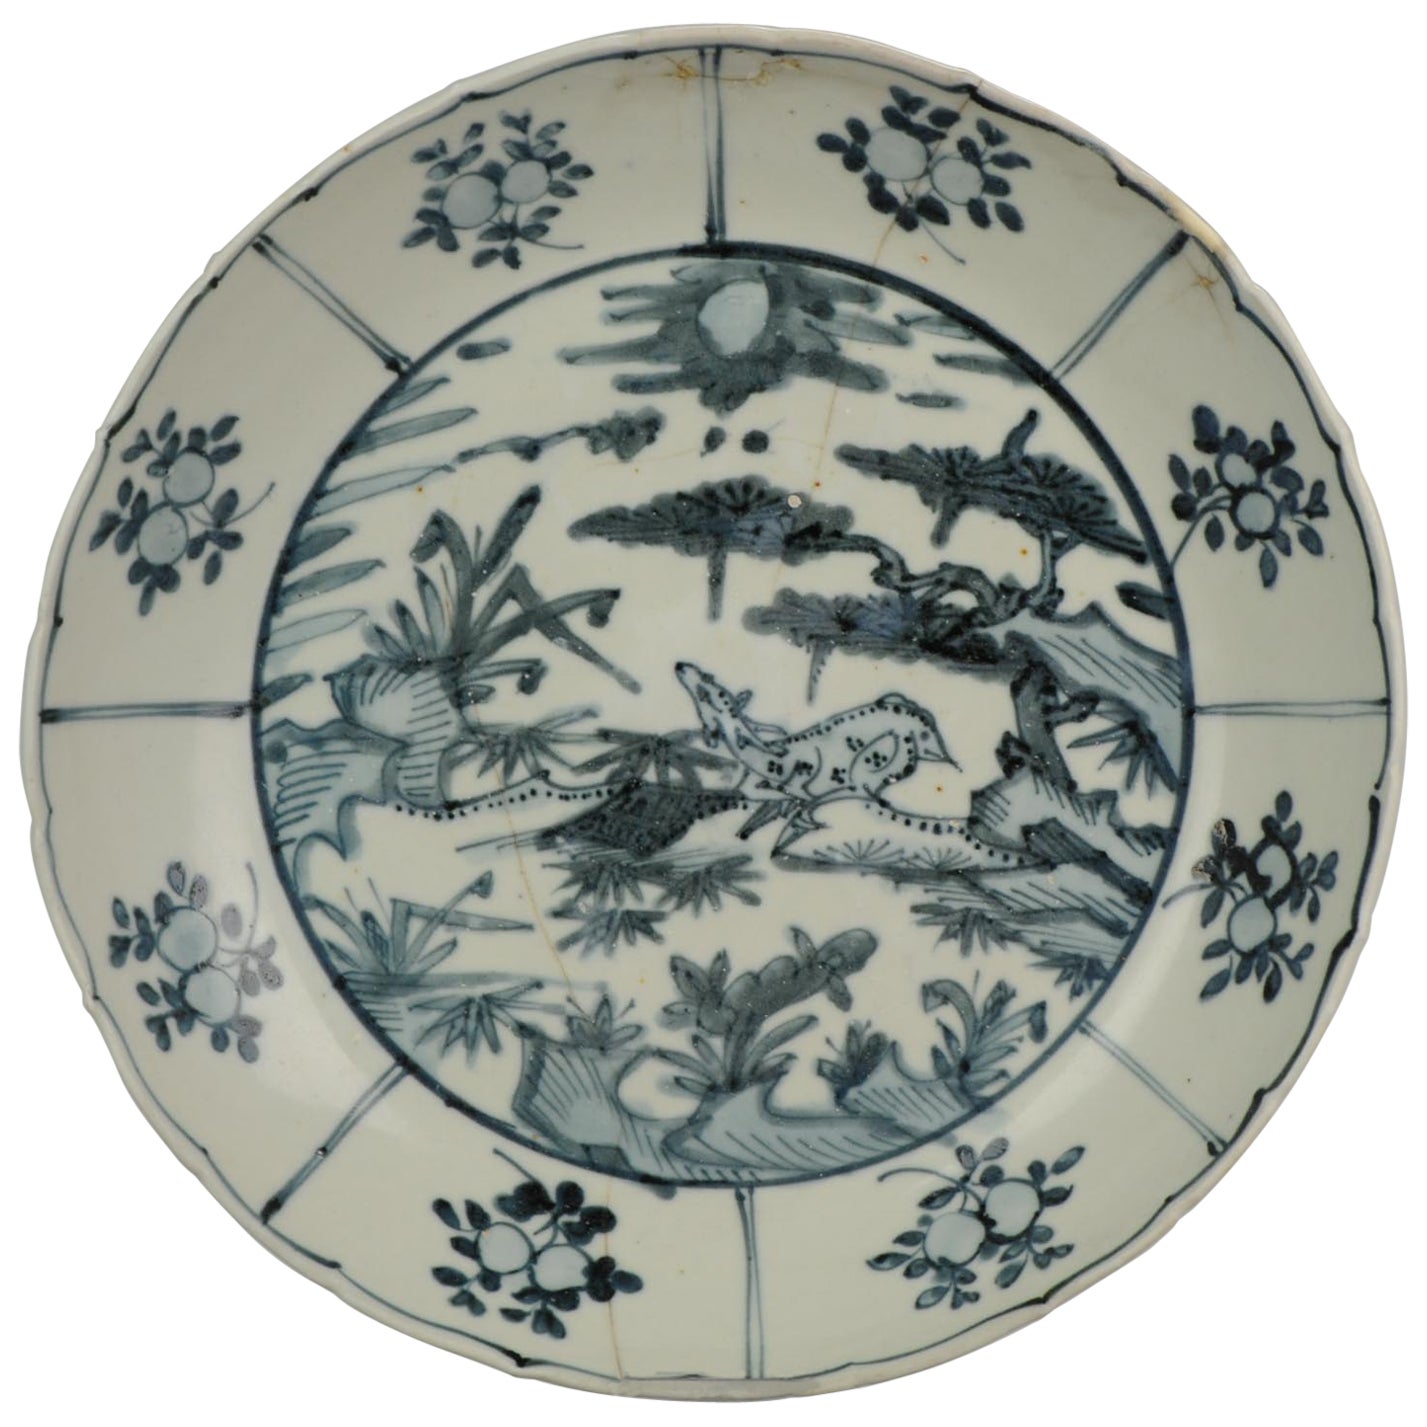 Antique Chinese Porcelain Jiajing/Wanli Ming Swatow Large Plate, 16/17th Century